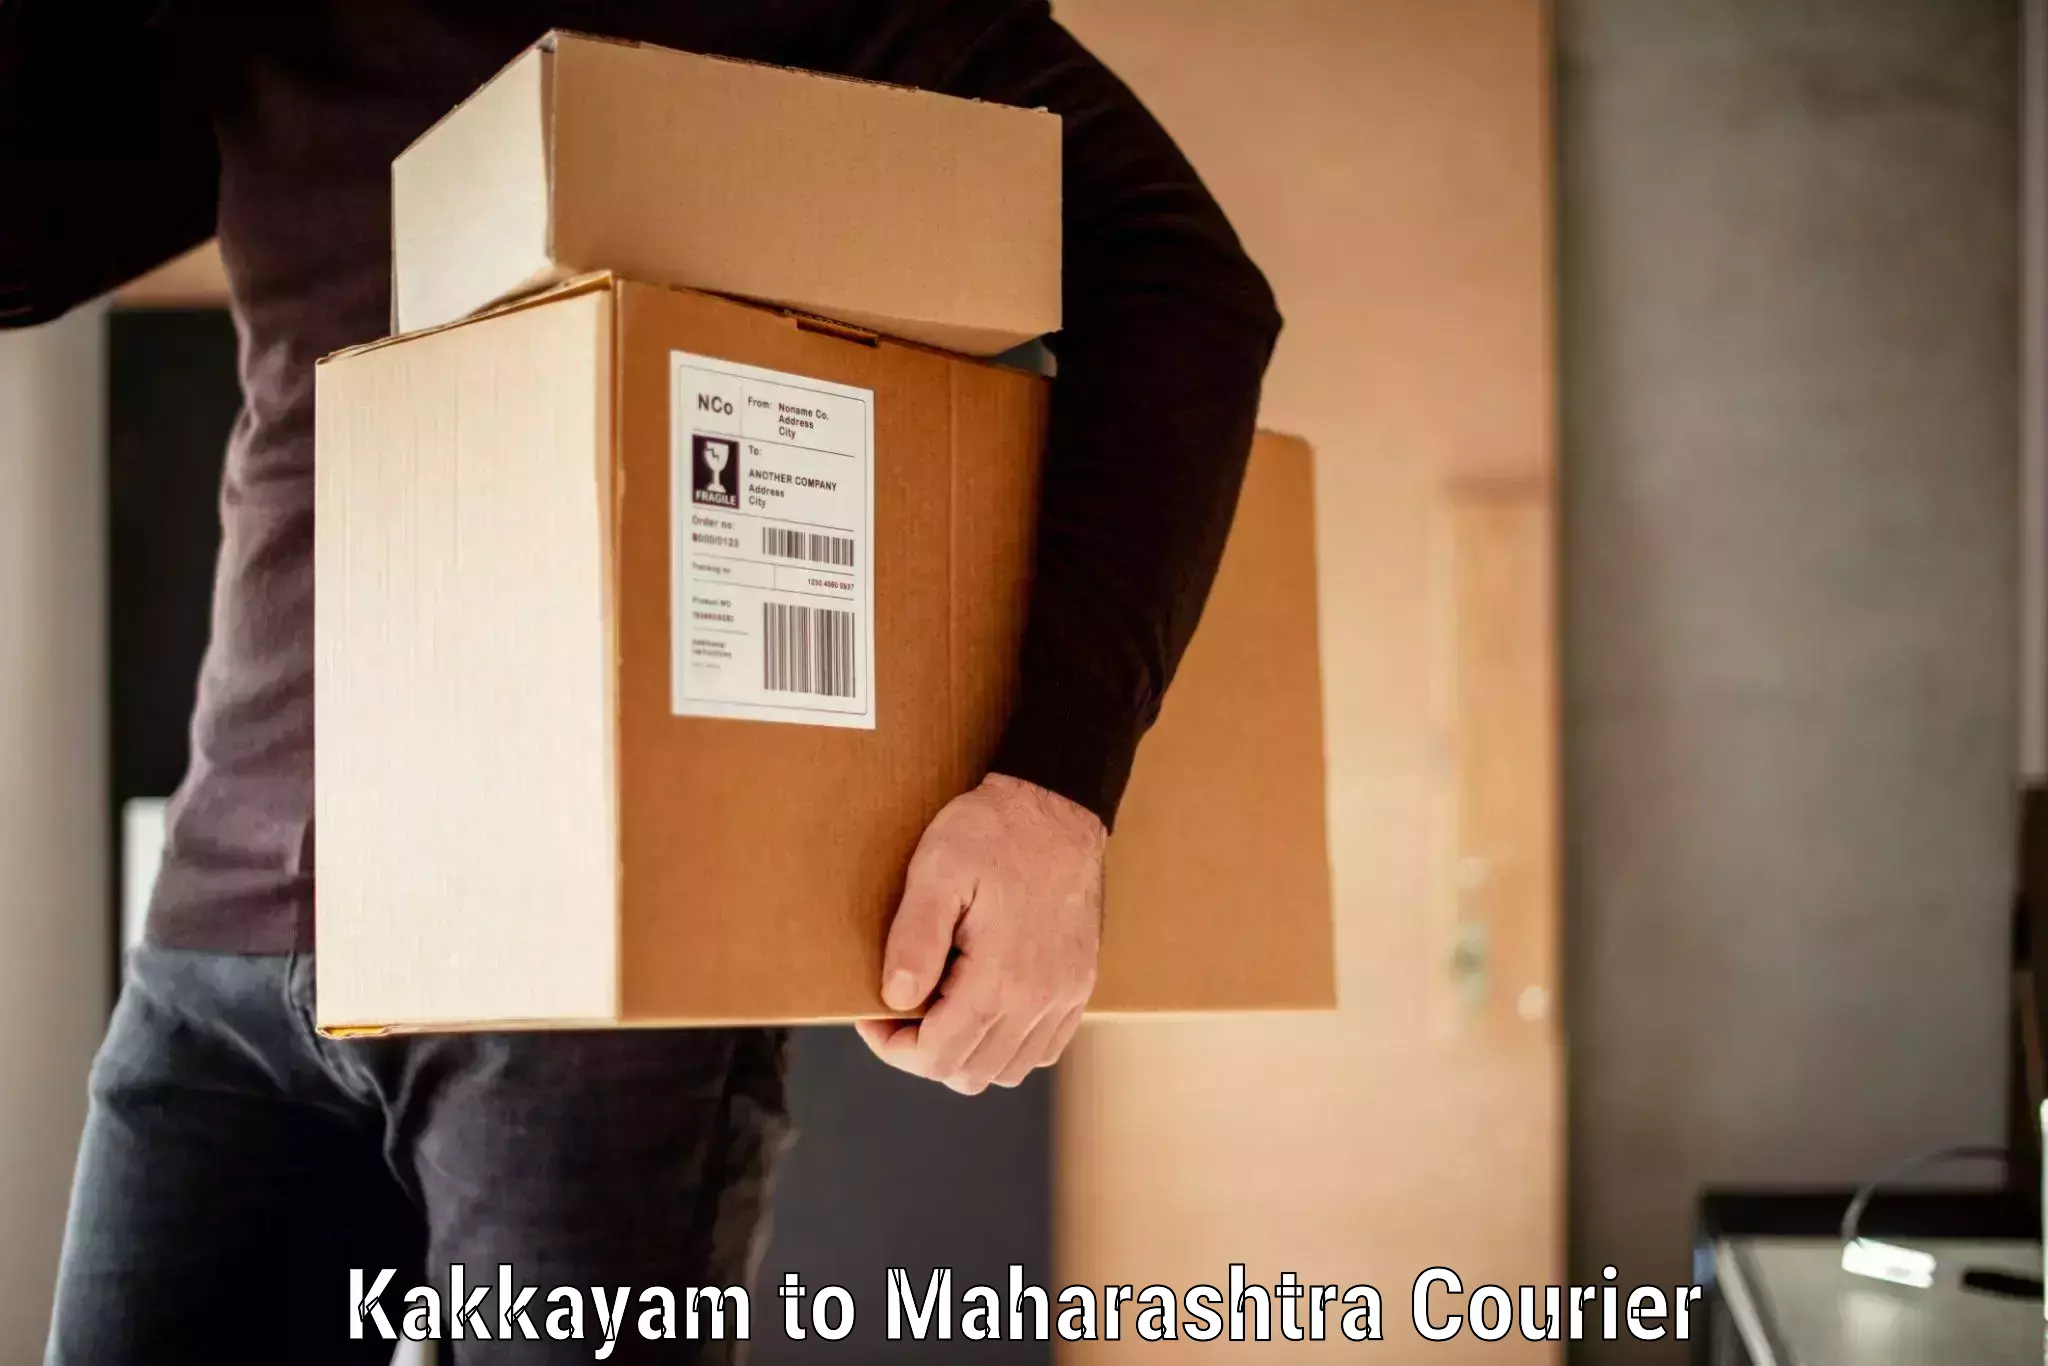 Baggage relocation service Kakkayam to Maharashtra